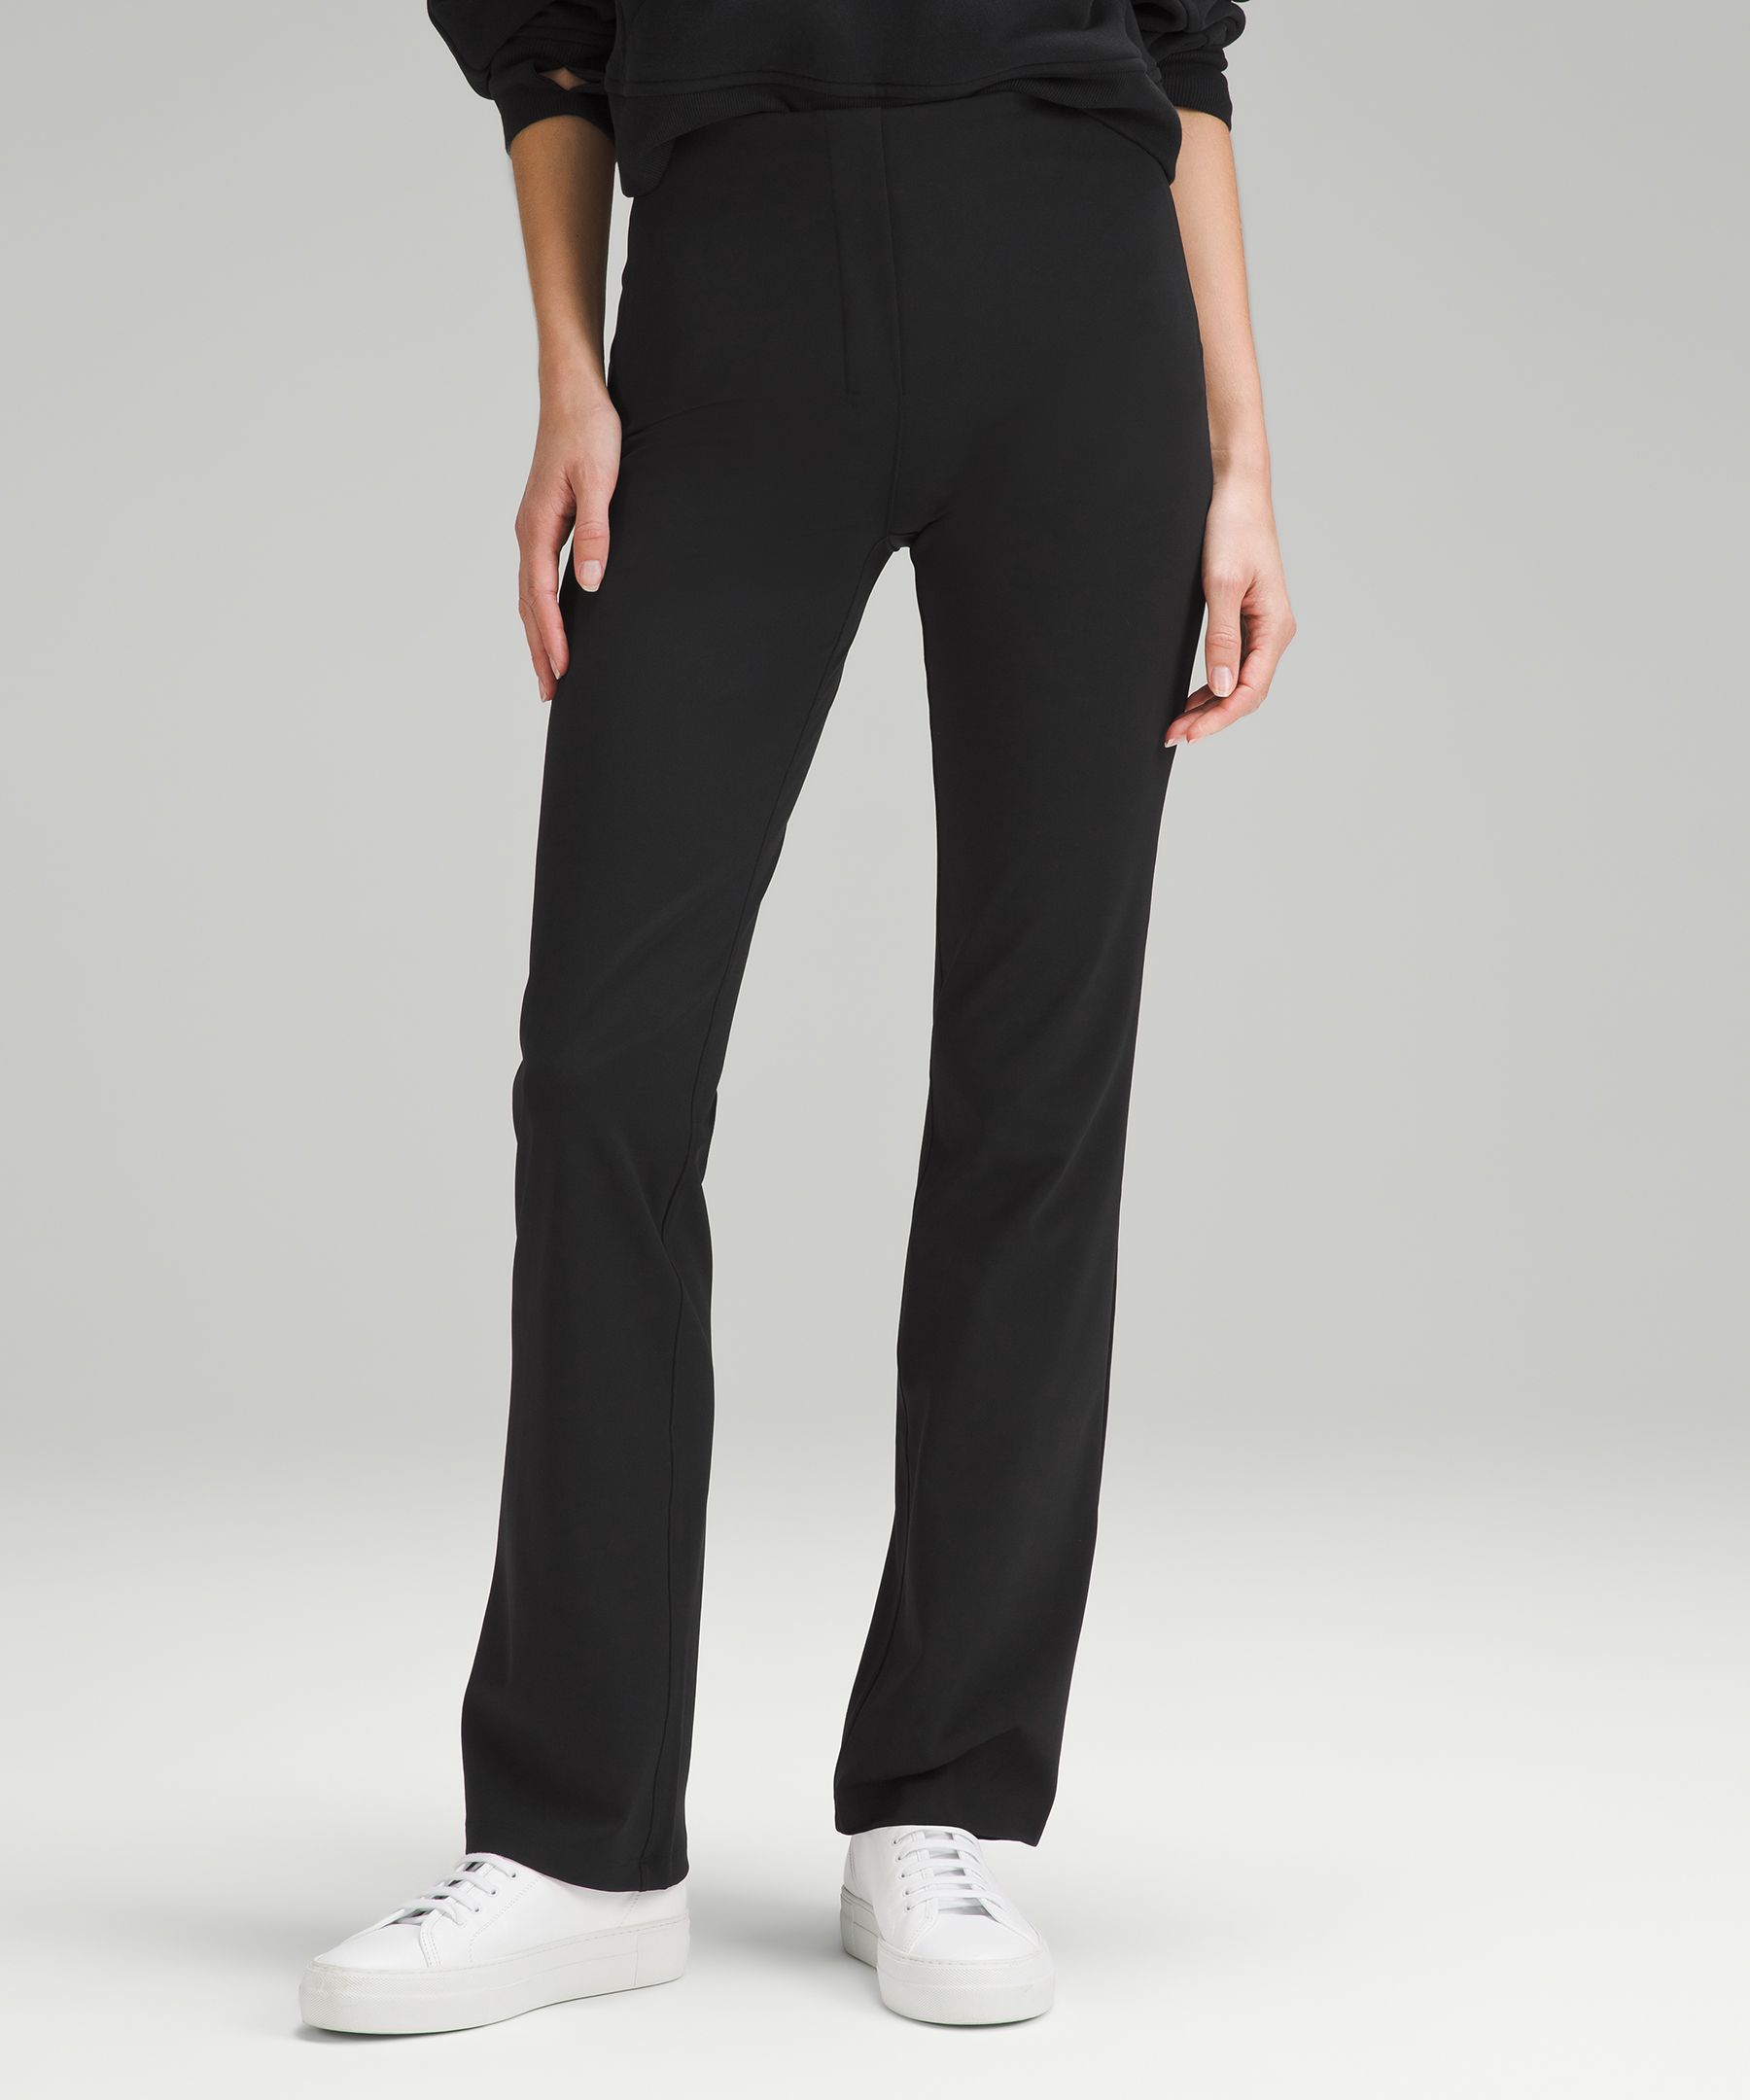 Lululemon High Rise Trouser Work Pants Dress Women's Sz 4 Black Zip Pockets  